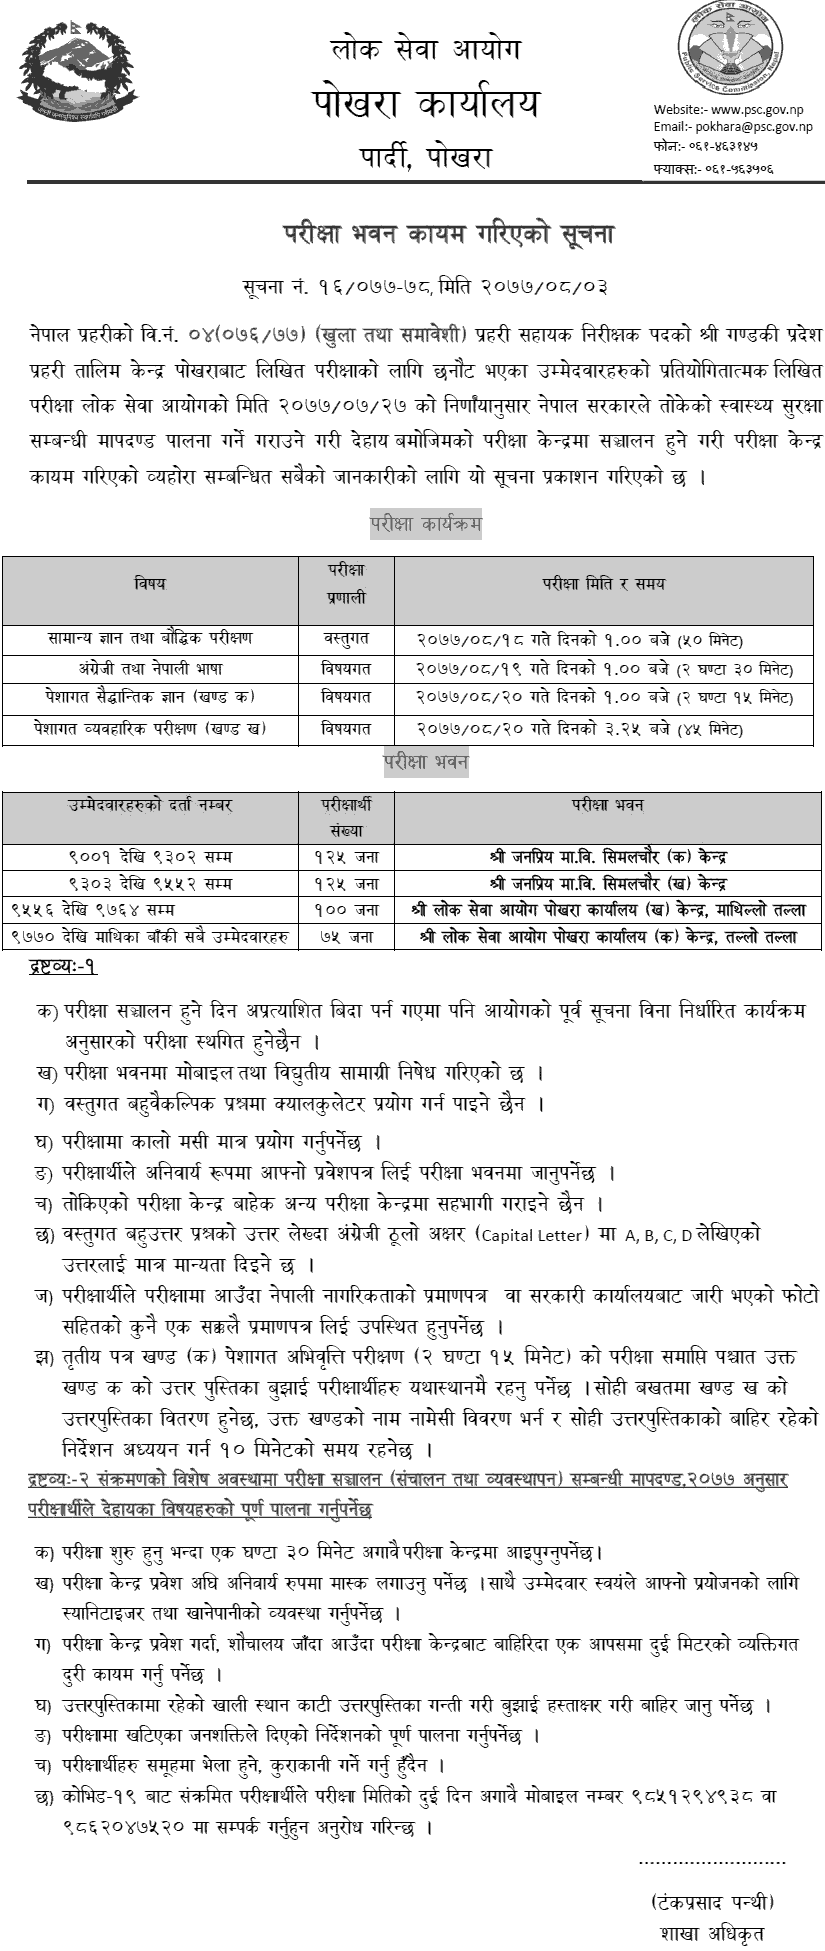 Nepal Police ASI Written Exam Pokhara Center